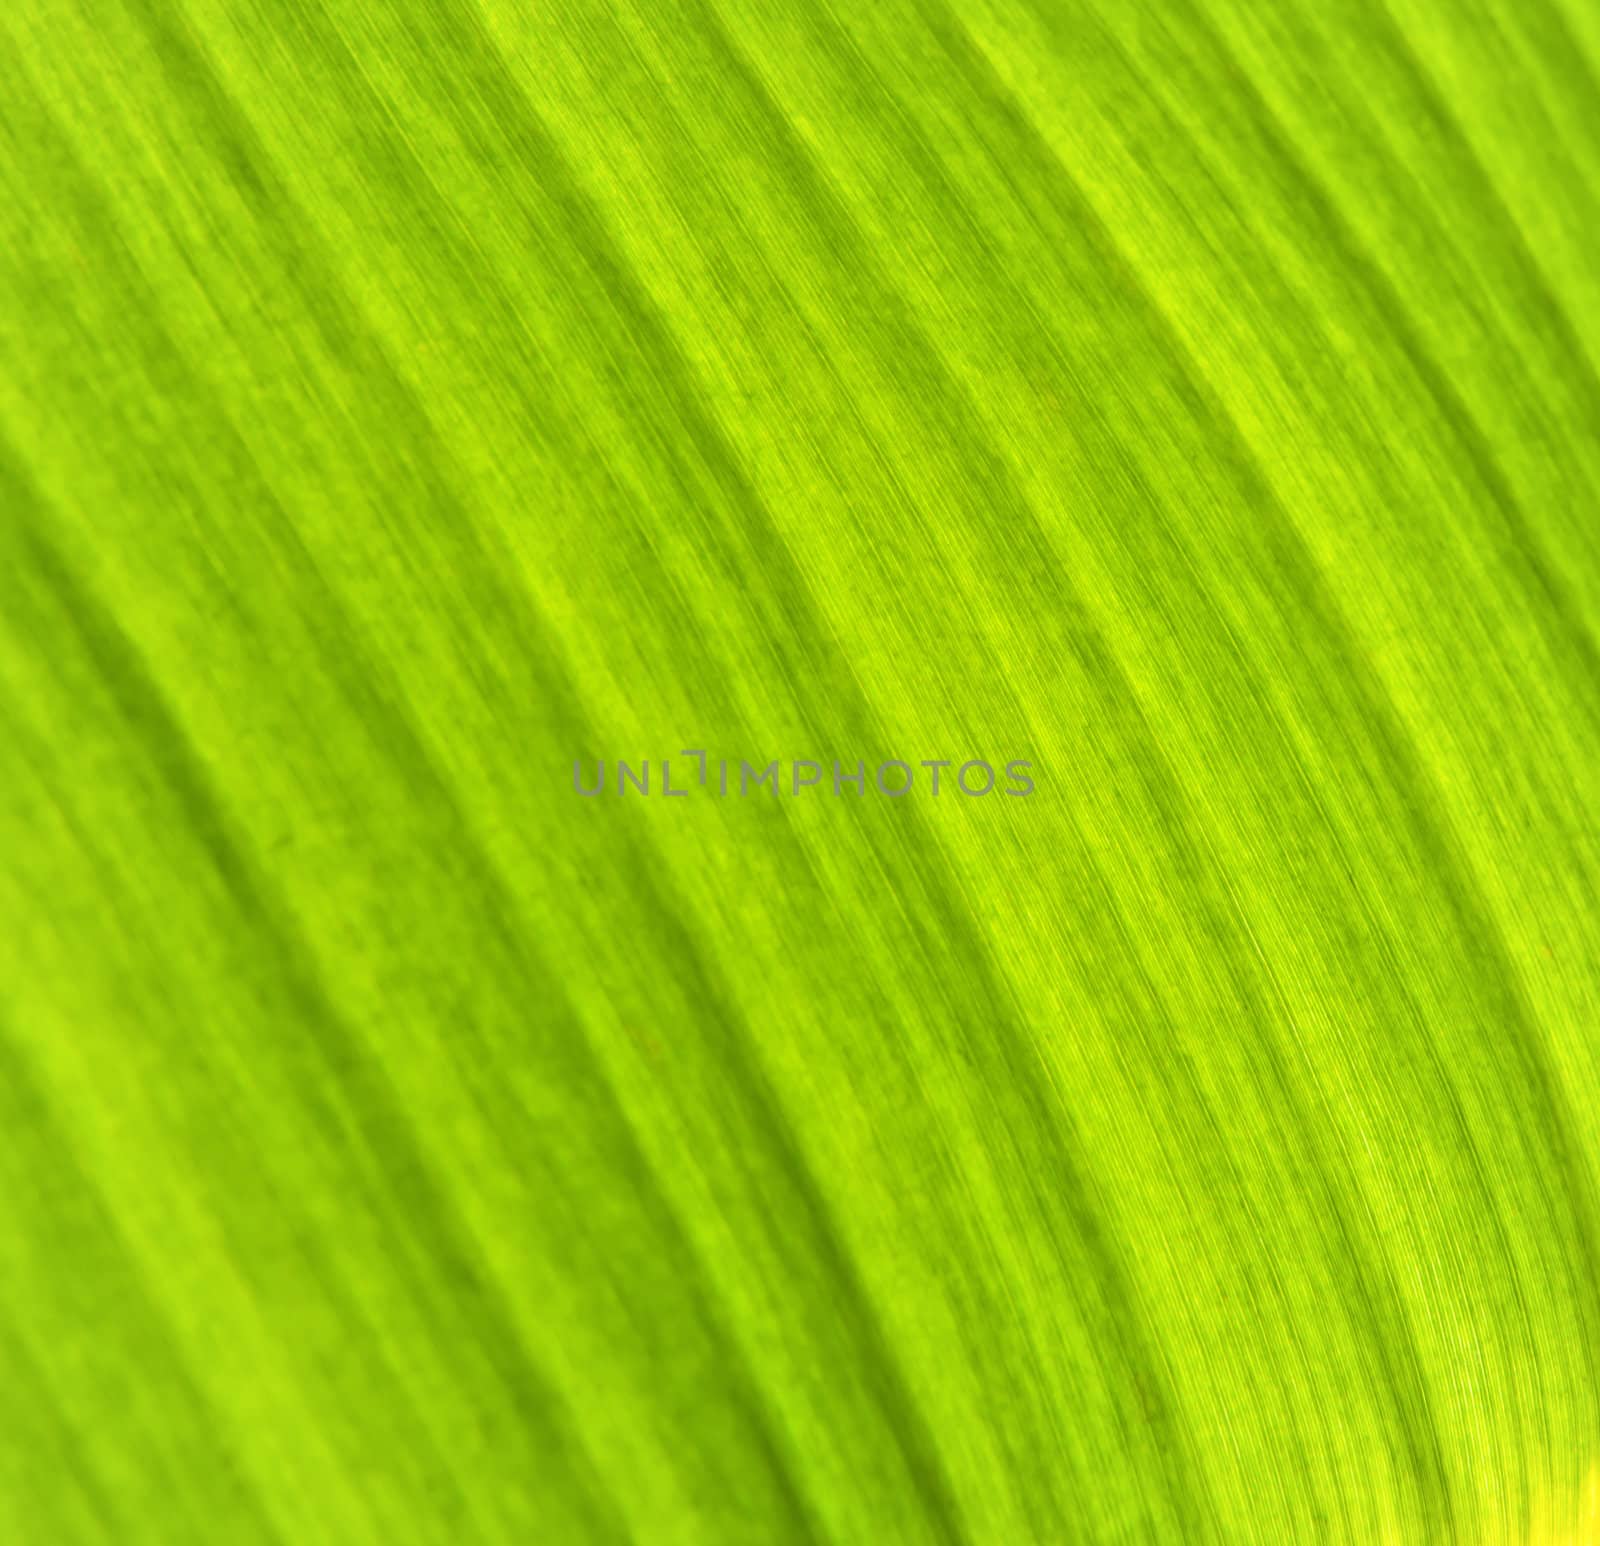 Banana leaf texture by bunwit